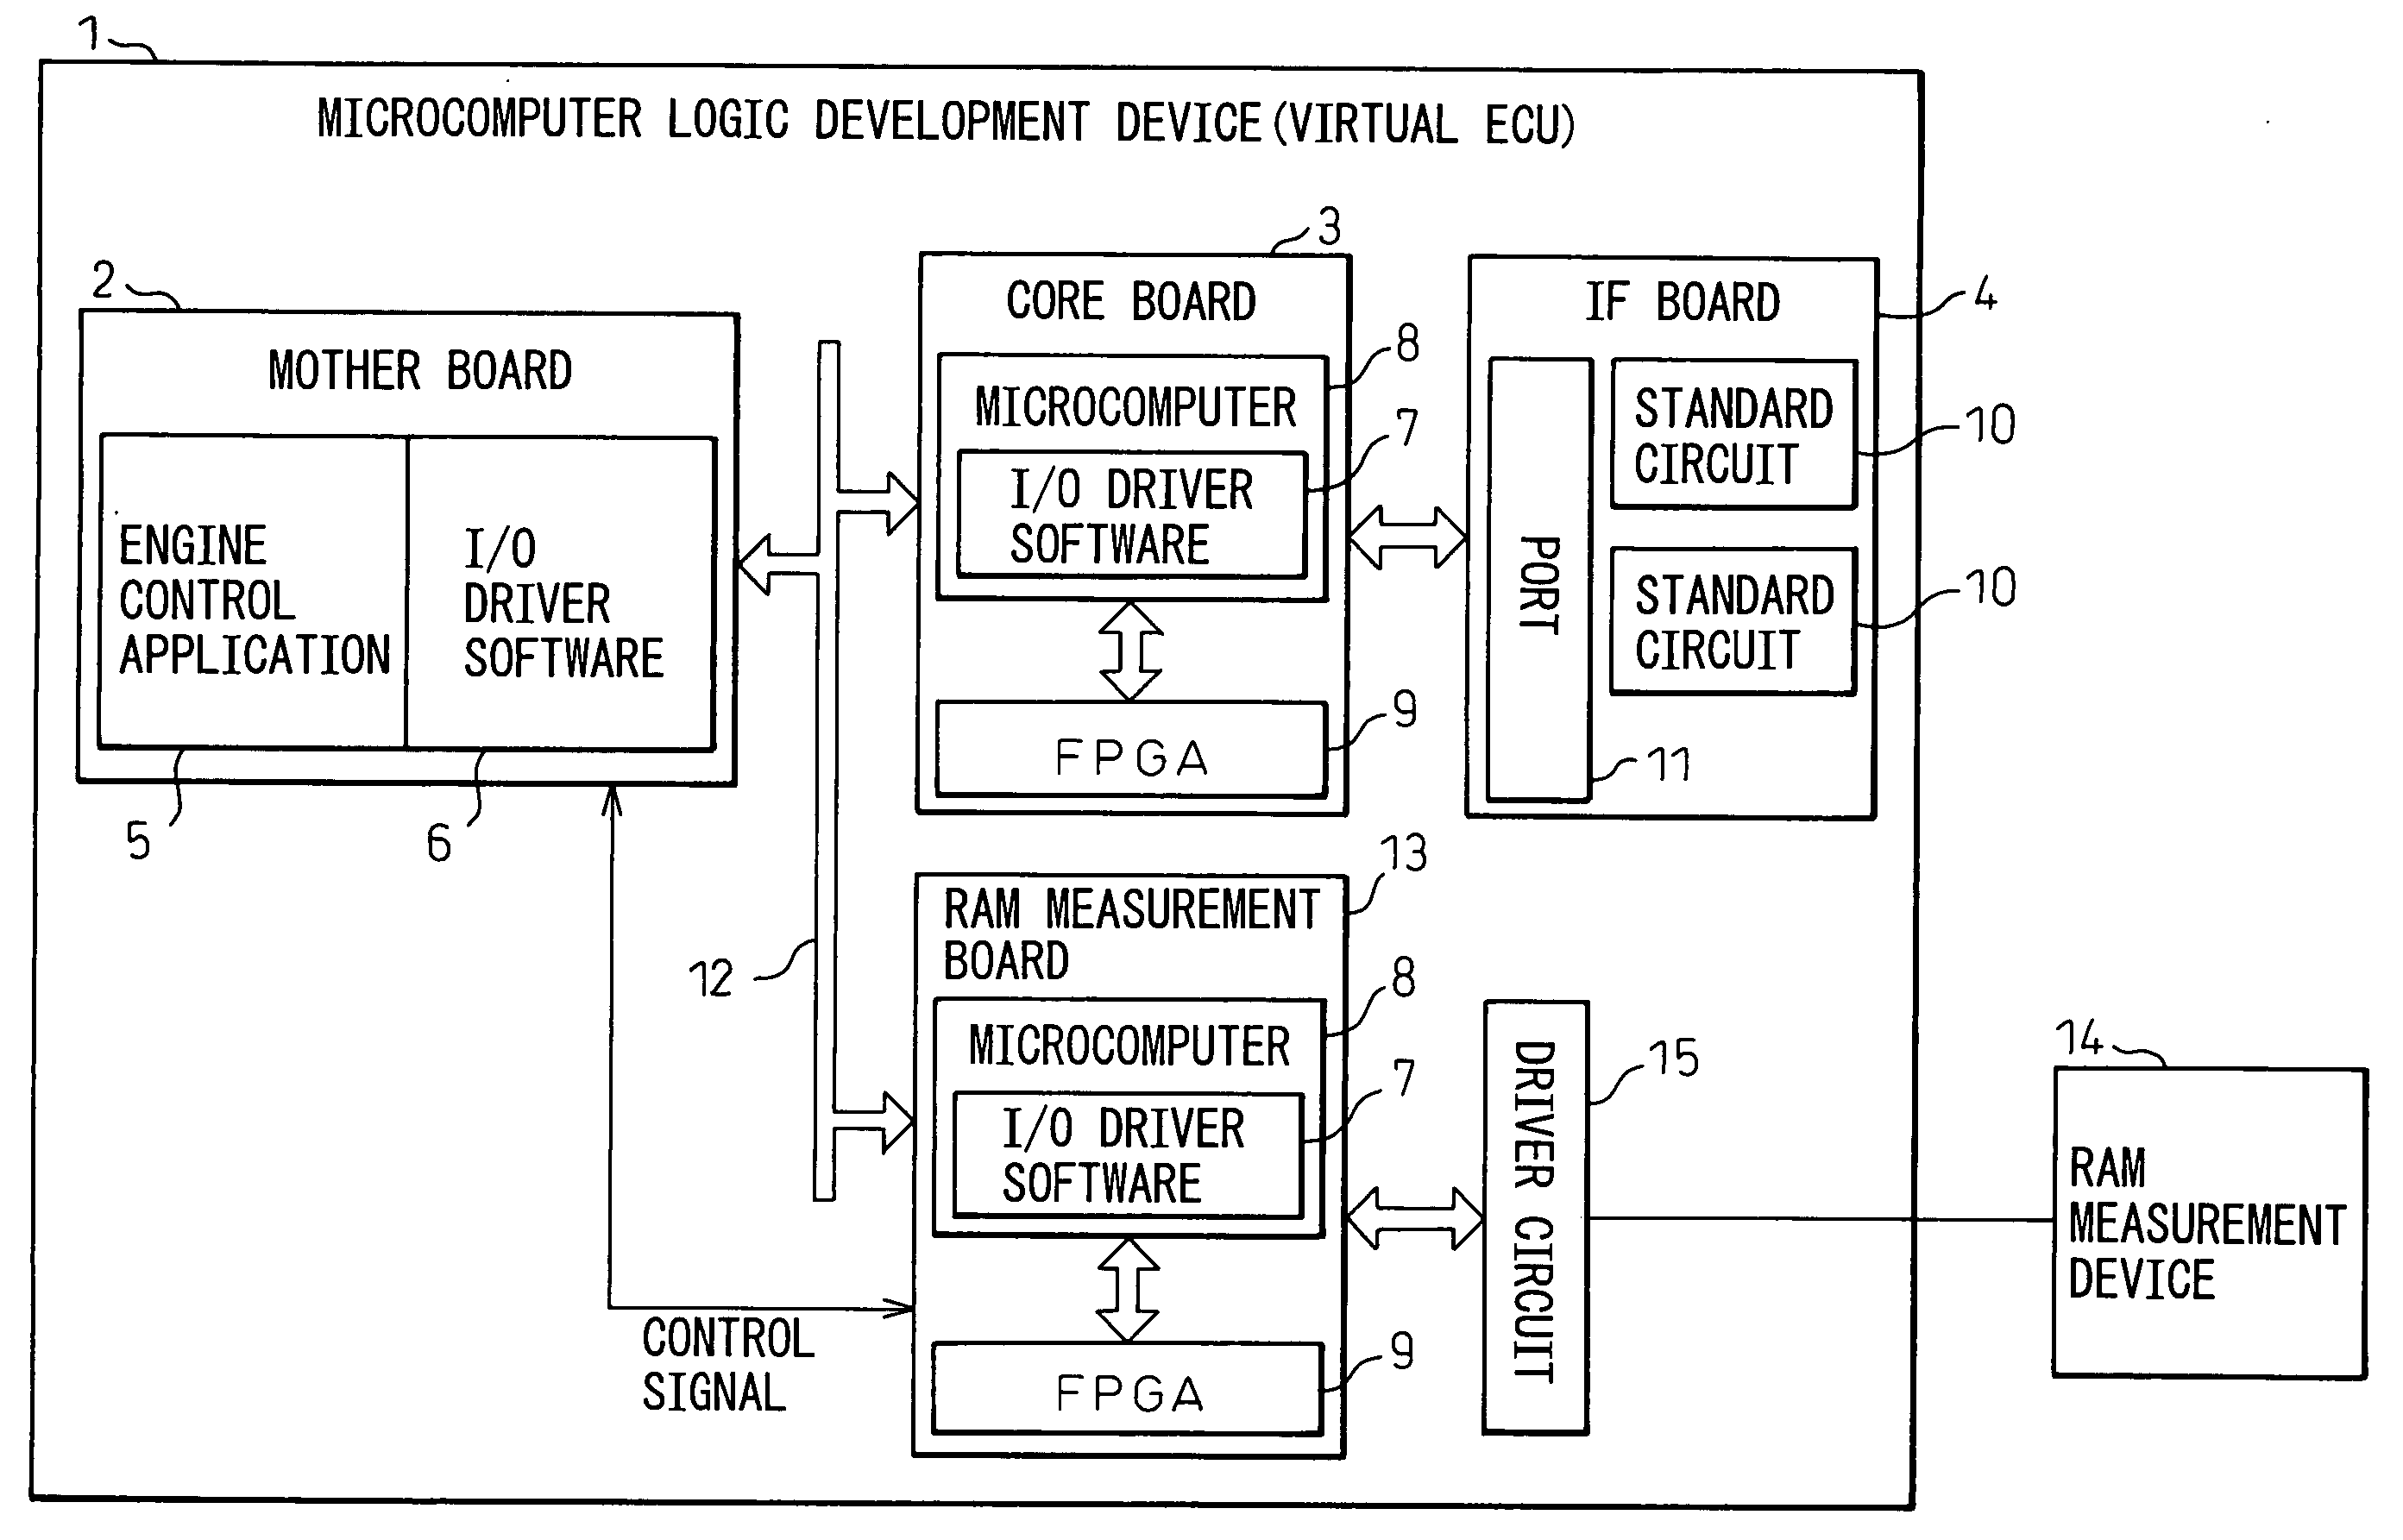 Microcomputer logic development device